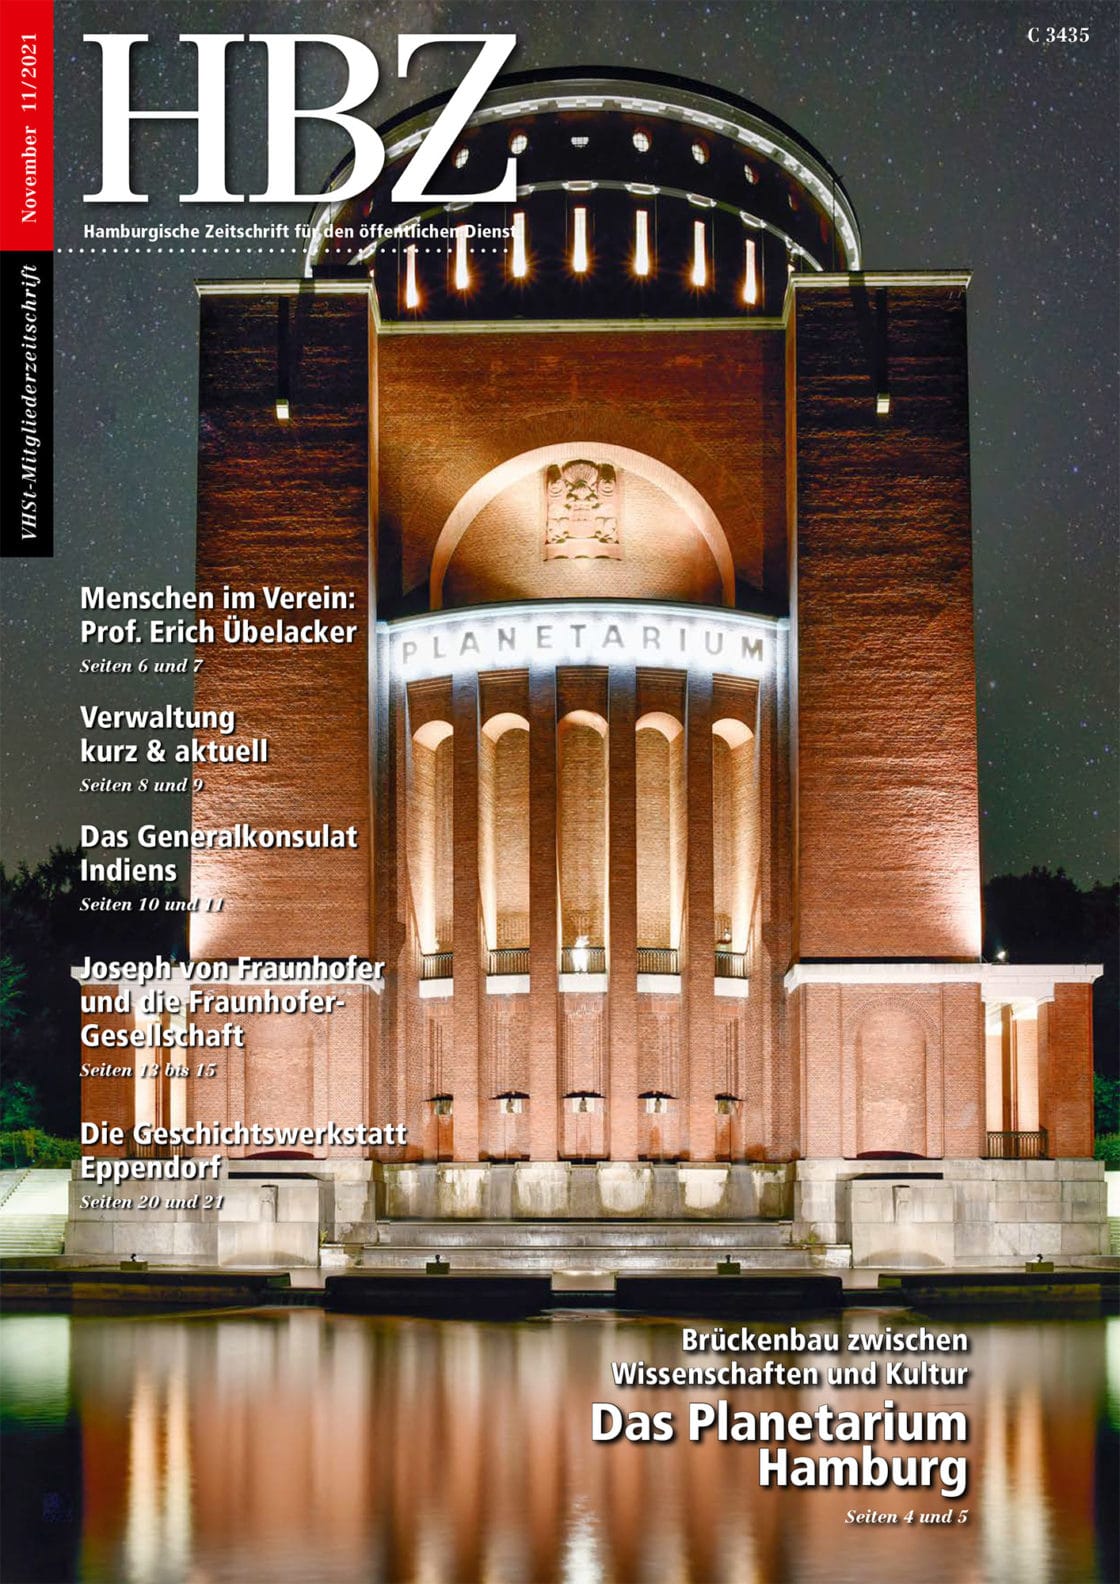 Cover Titelfoto Magazin HBZ Planetarium Fotografenwerk Hamburg